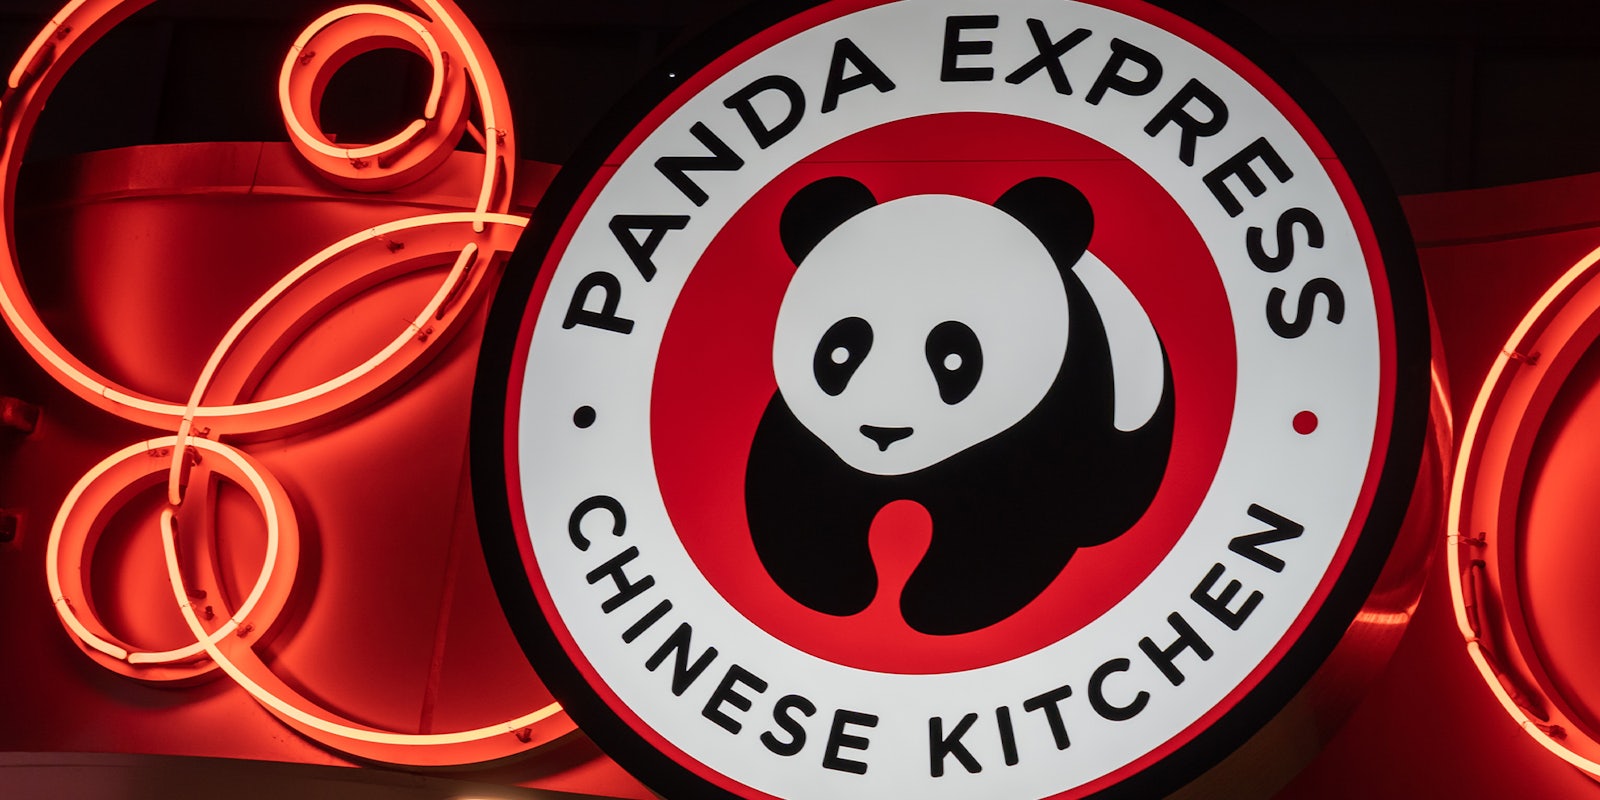 Panda Express logo in the night is shown in Orlando, FL, USA.